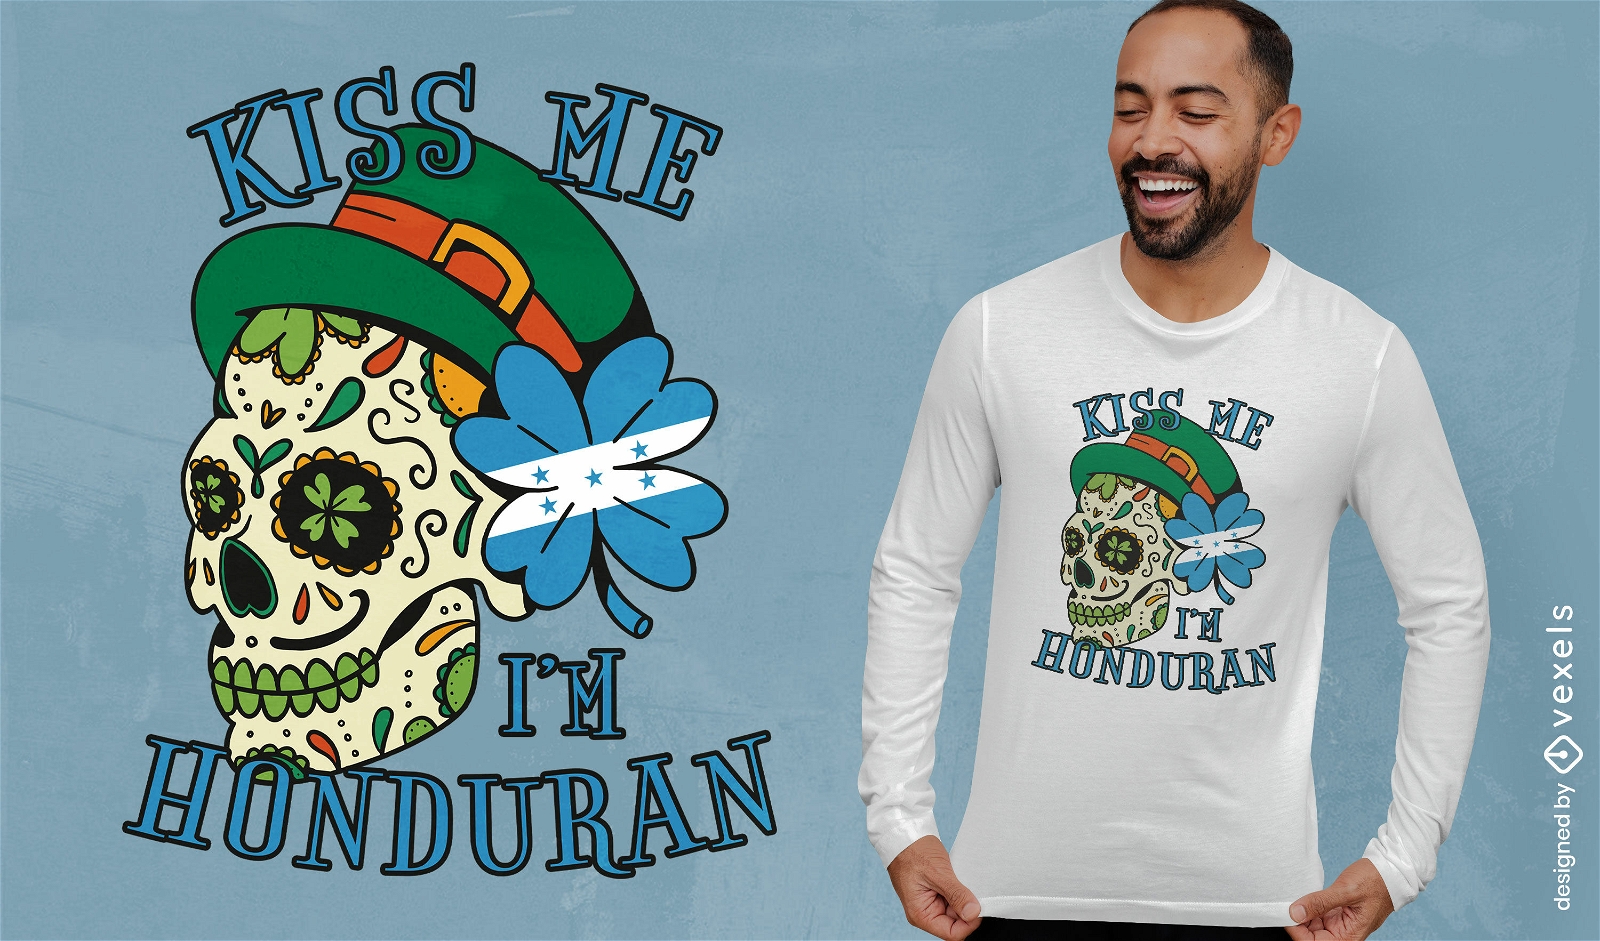 Kiss me I'm Honduran t-shirt design